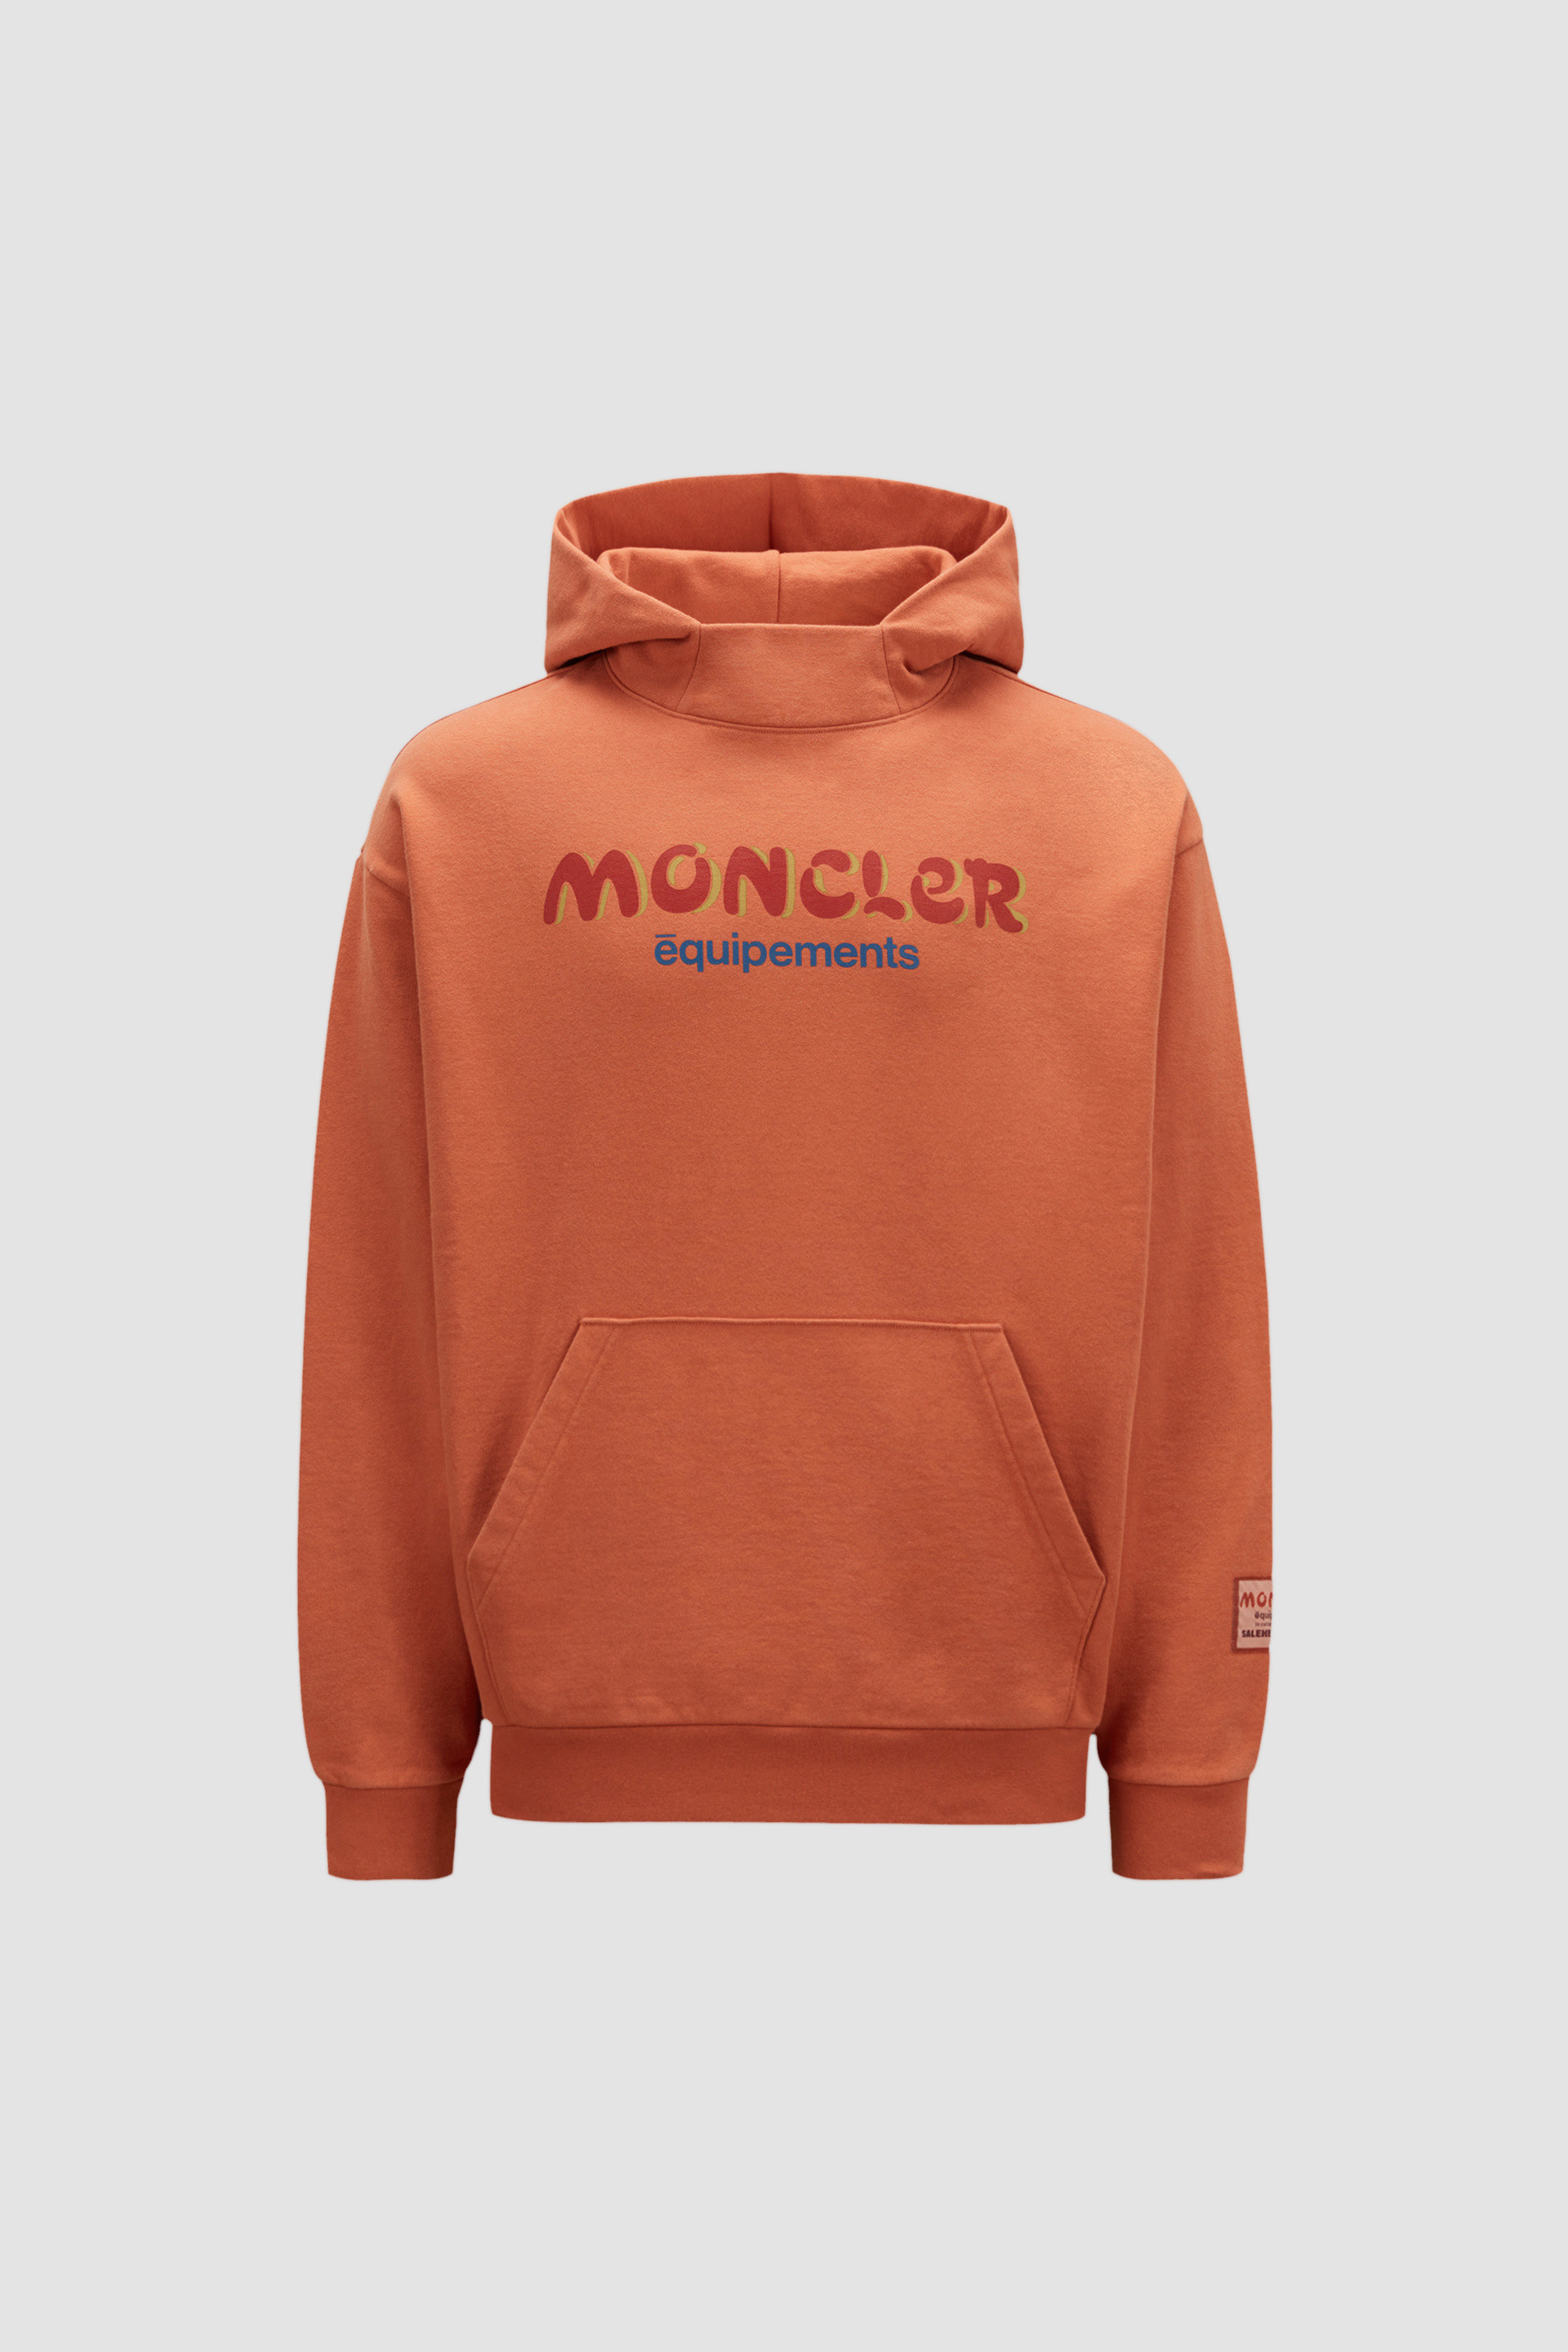 Moncler x Salehe Bembury for Genius - Shop Genius | Moncler JP